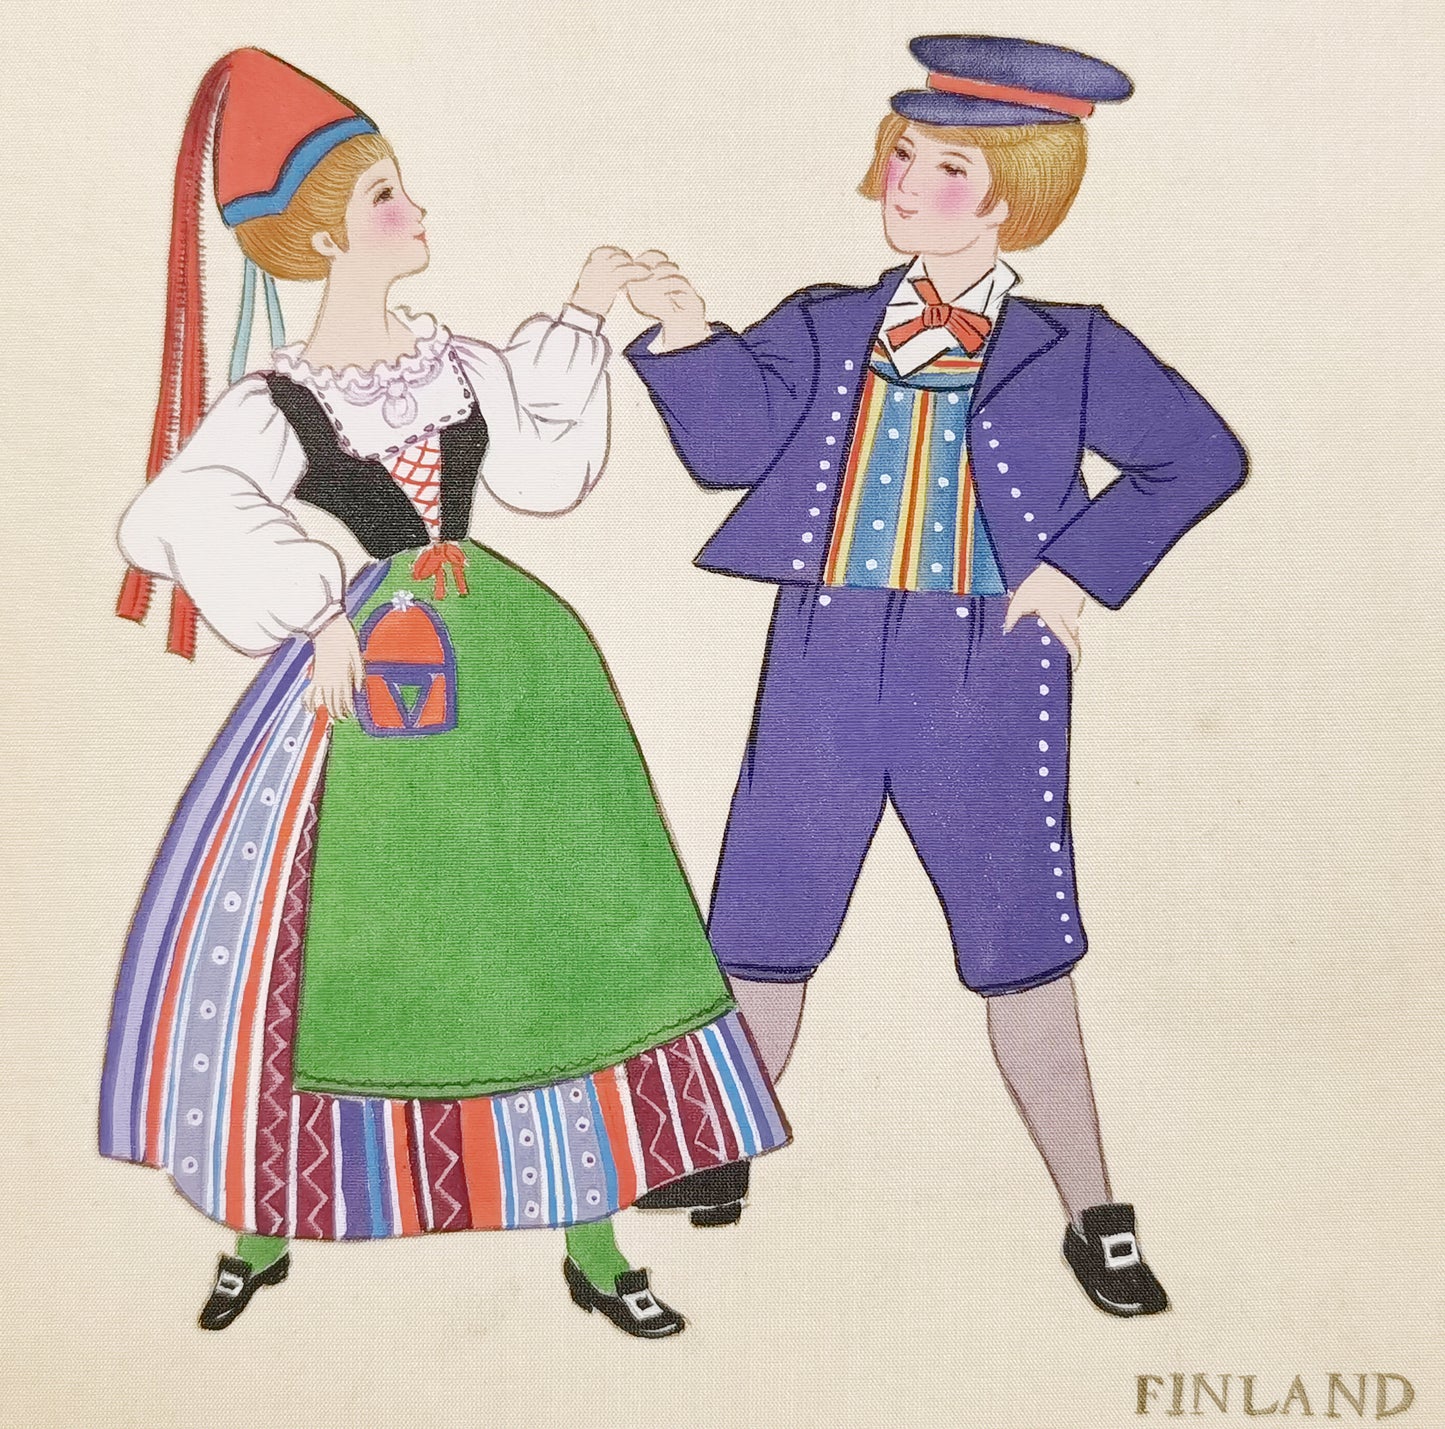 Finland Folk Costume Handmade Art Printing with Wood Frame